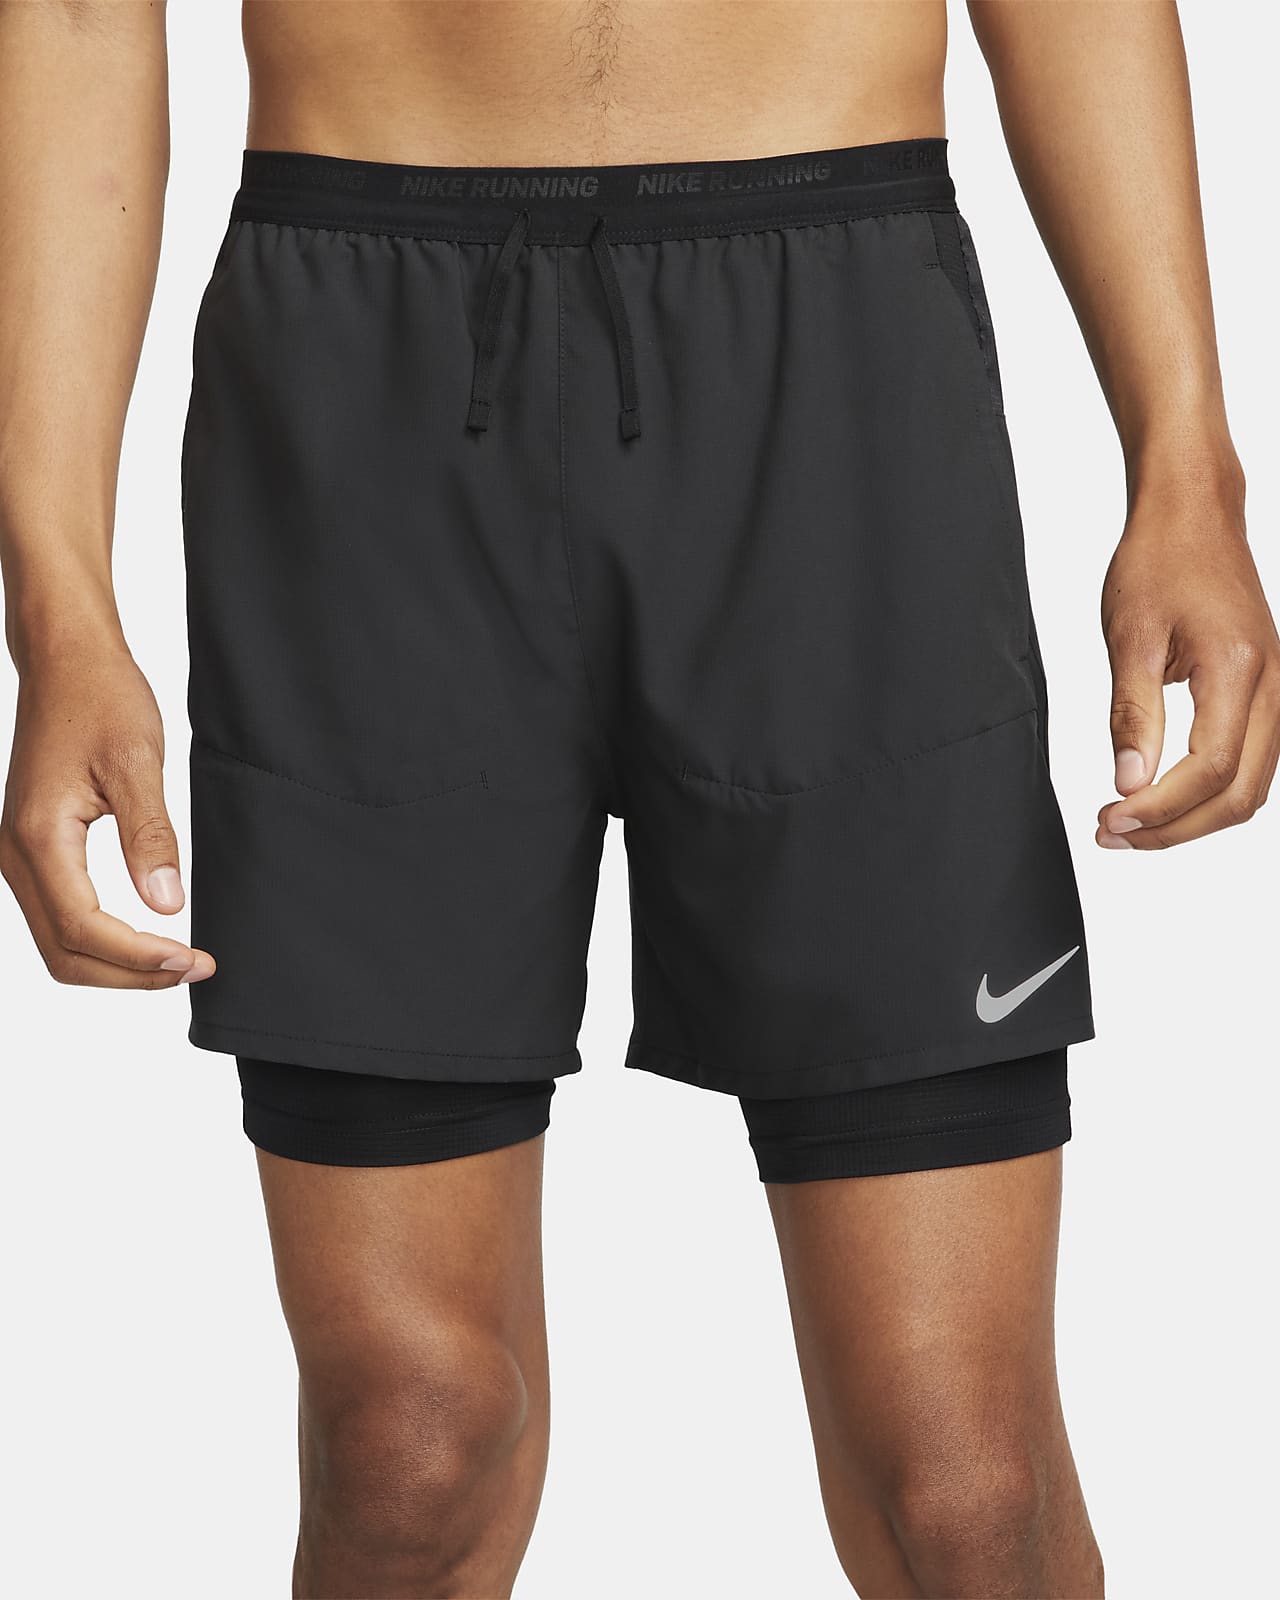 Nike Dri Fit Running Shorts Girls Black Blue White Athletic Size L